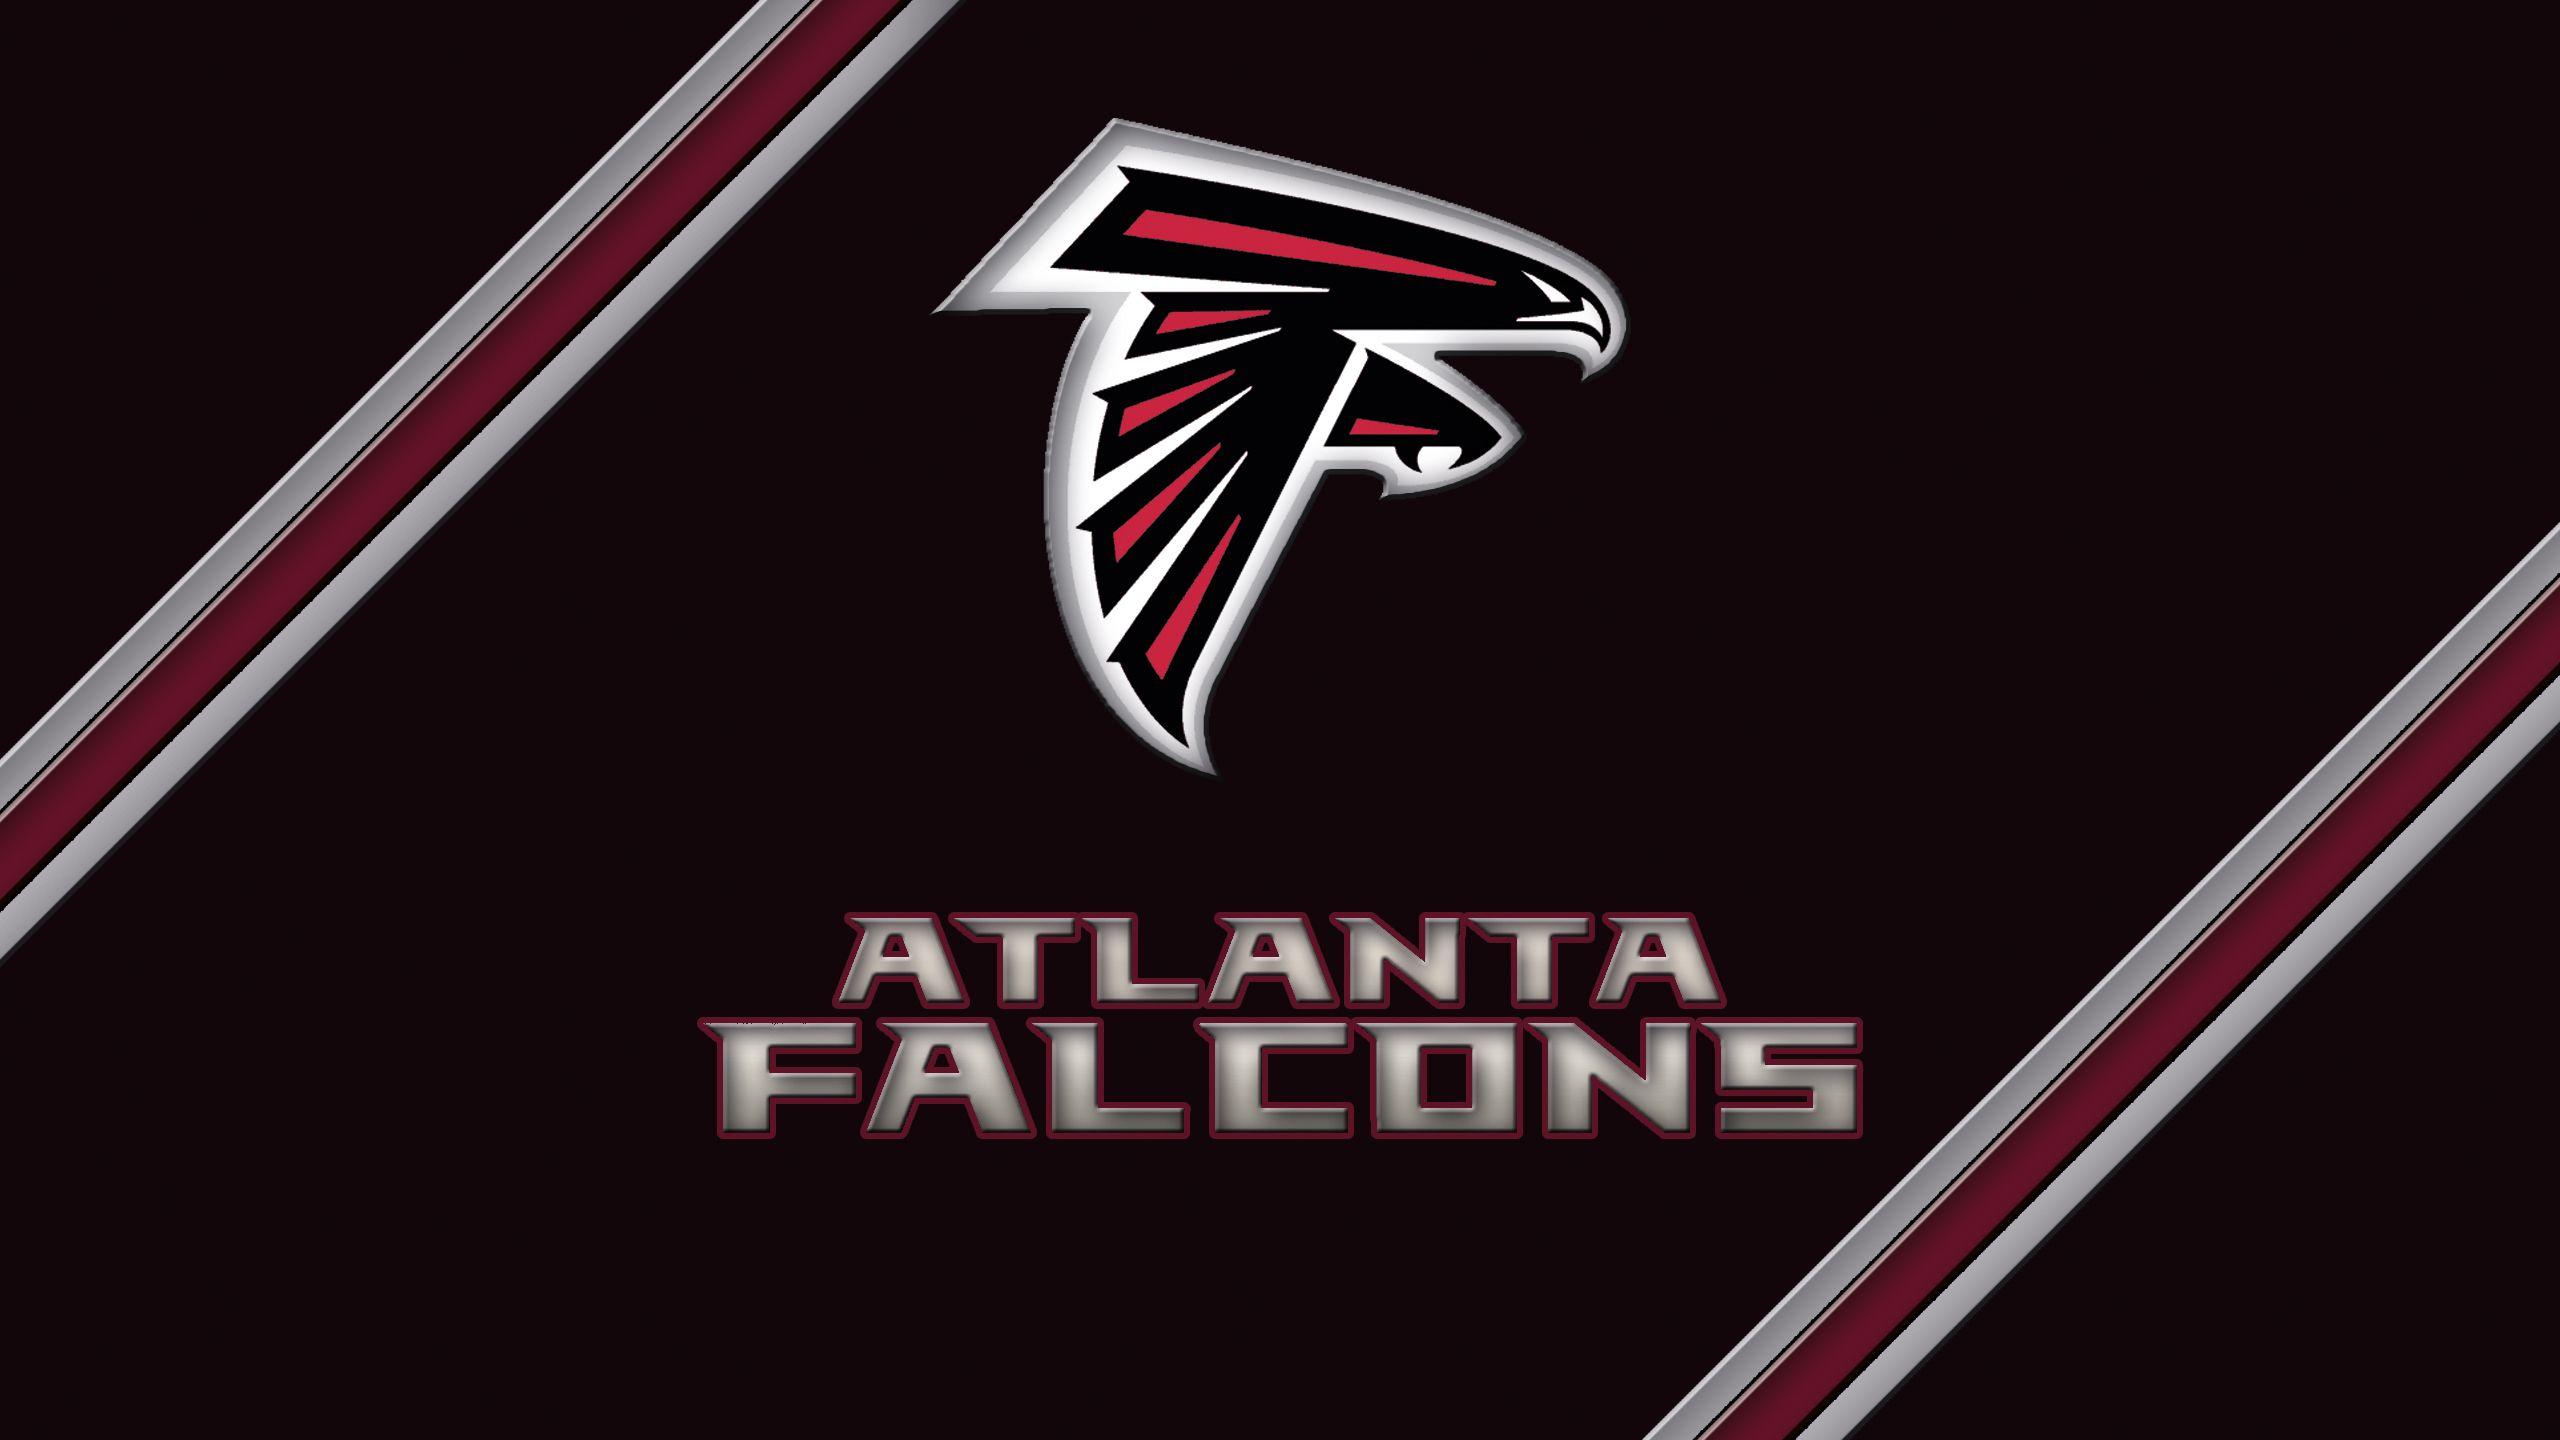 Sports Atlanta Falcons wallpaper Desktop, Phone, Tablet